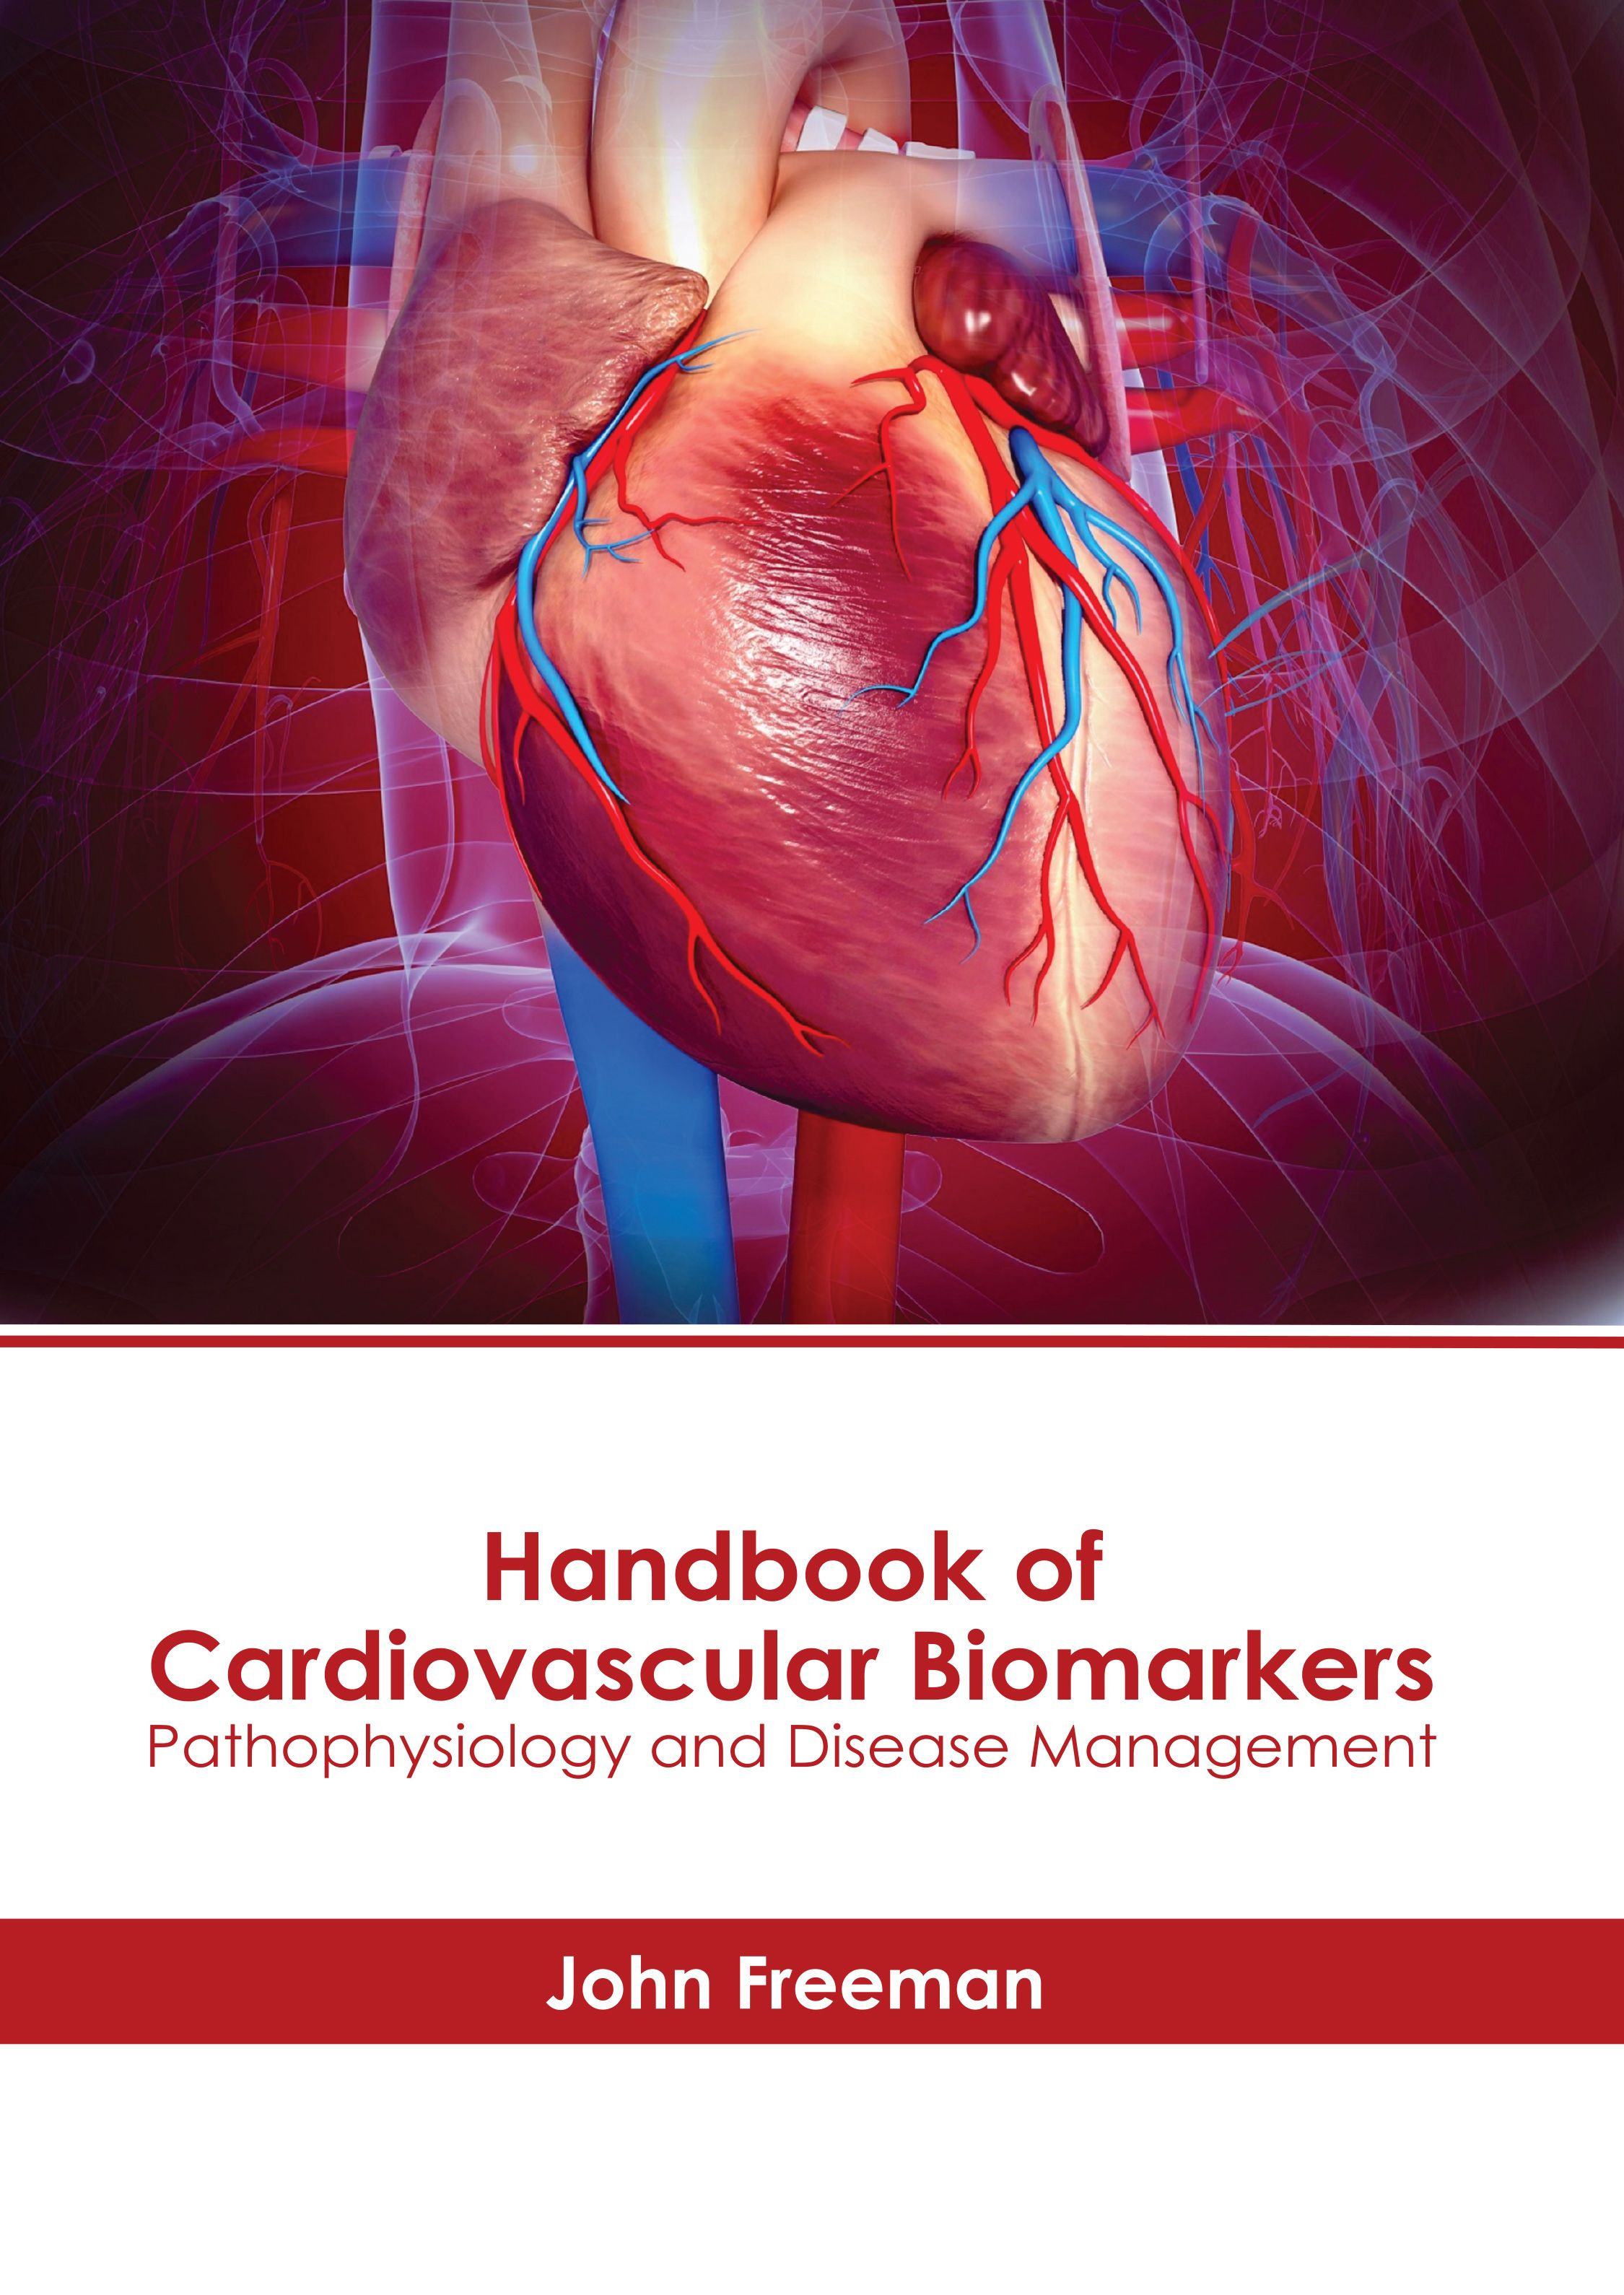 HANDBOOK OF CARDIOVASCULAR BIOMARKERS: PATHOPHYSIOLOGY AND DISEASE MANAGEMENT